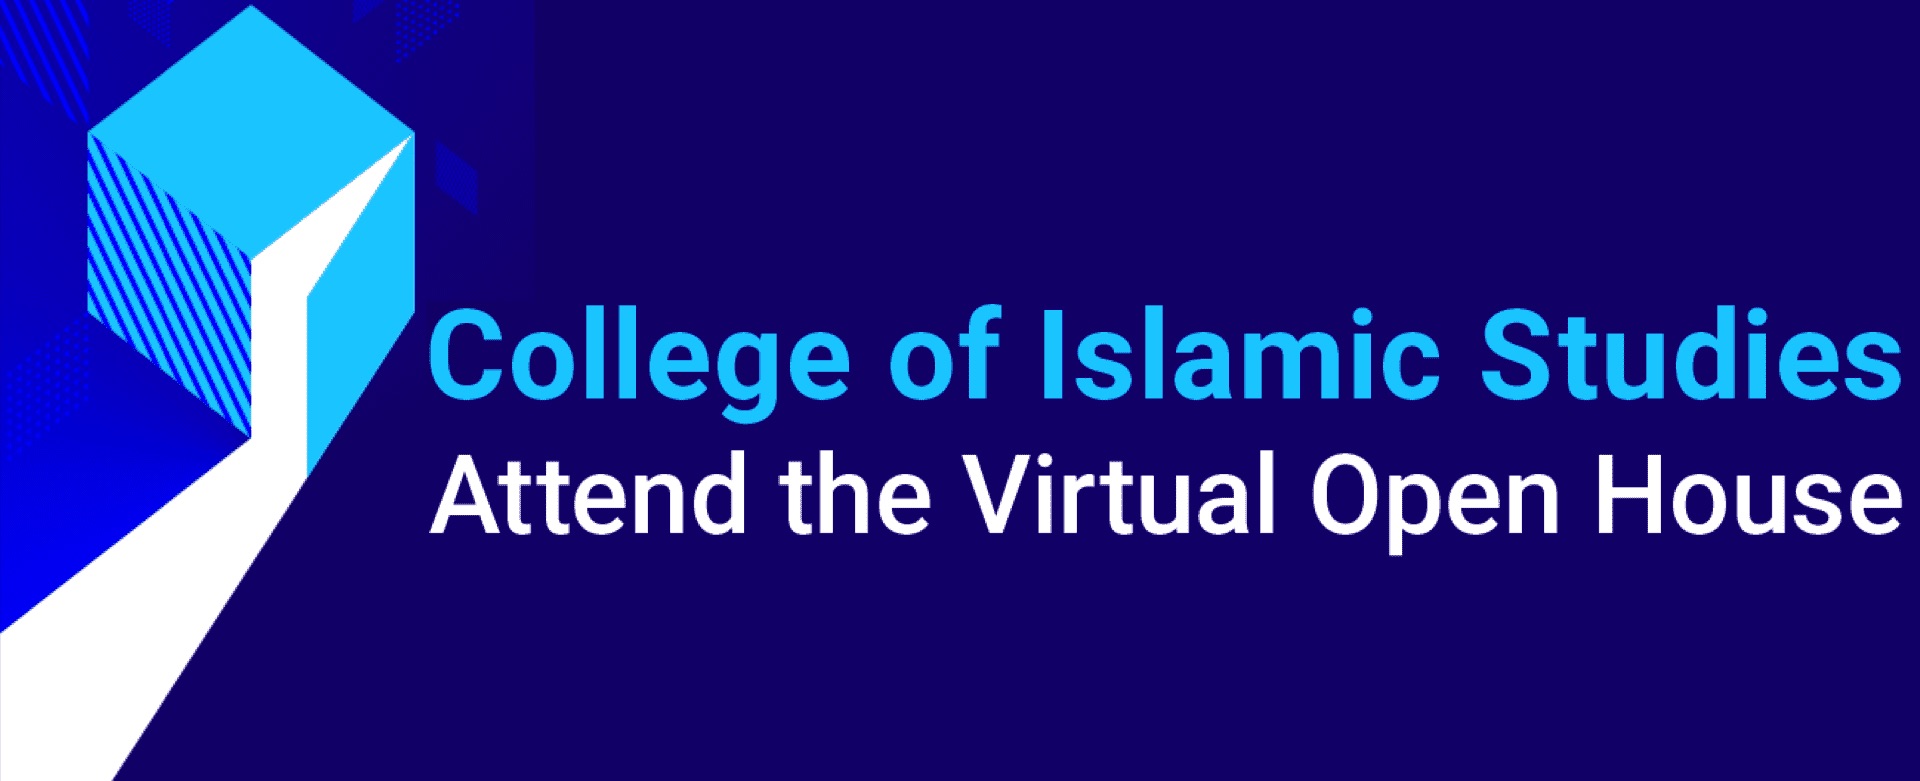 Virtual Open House - College of Islamic Studies